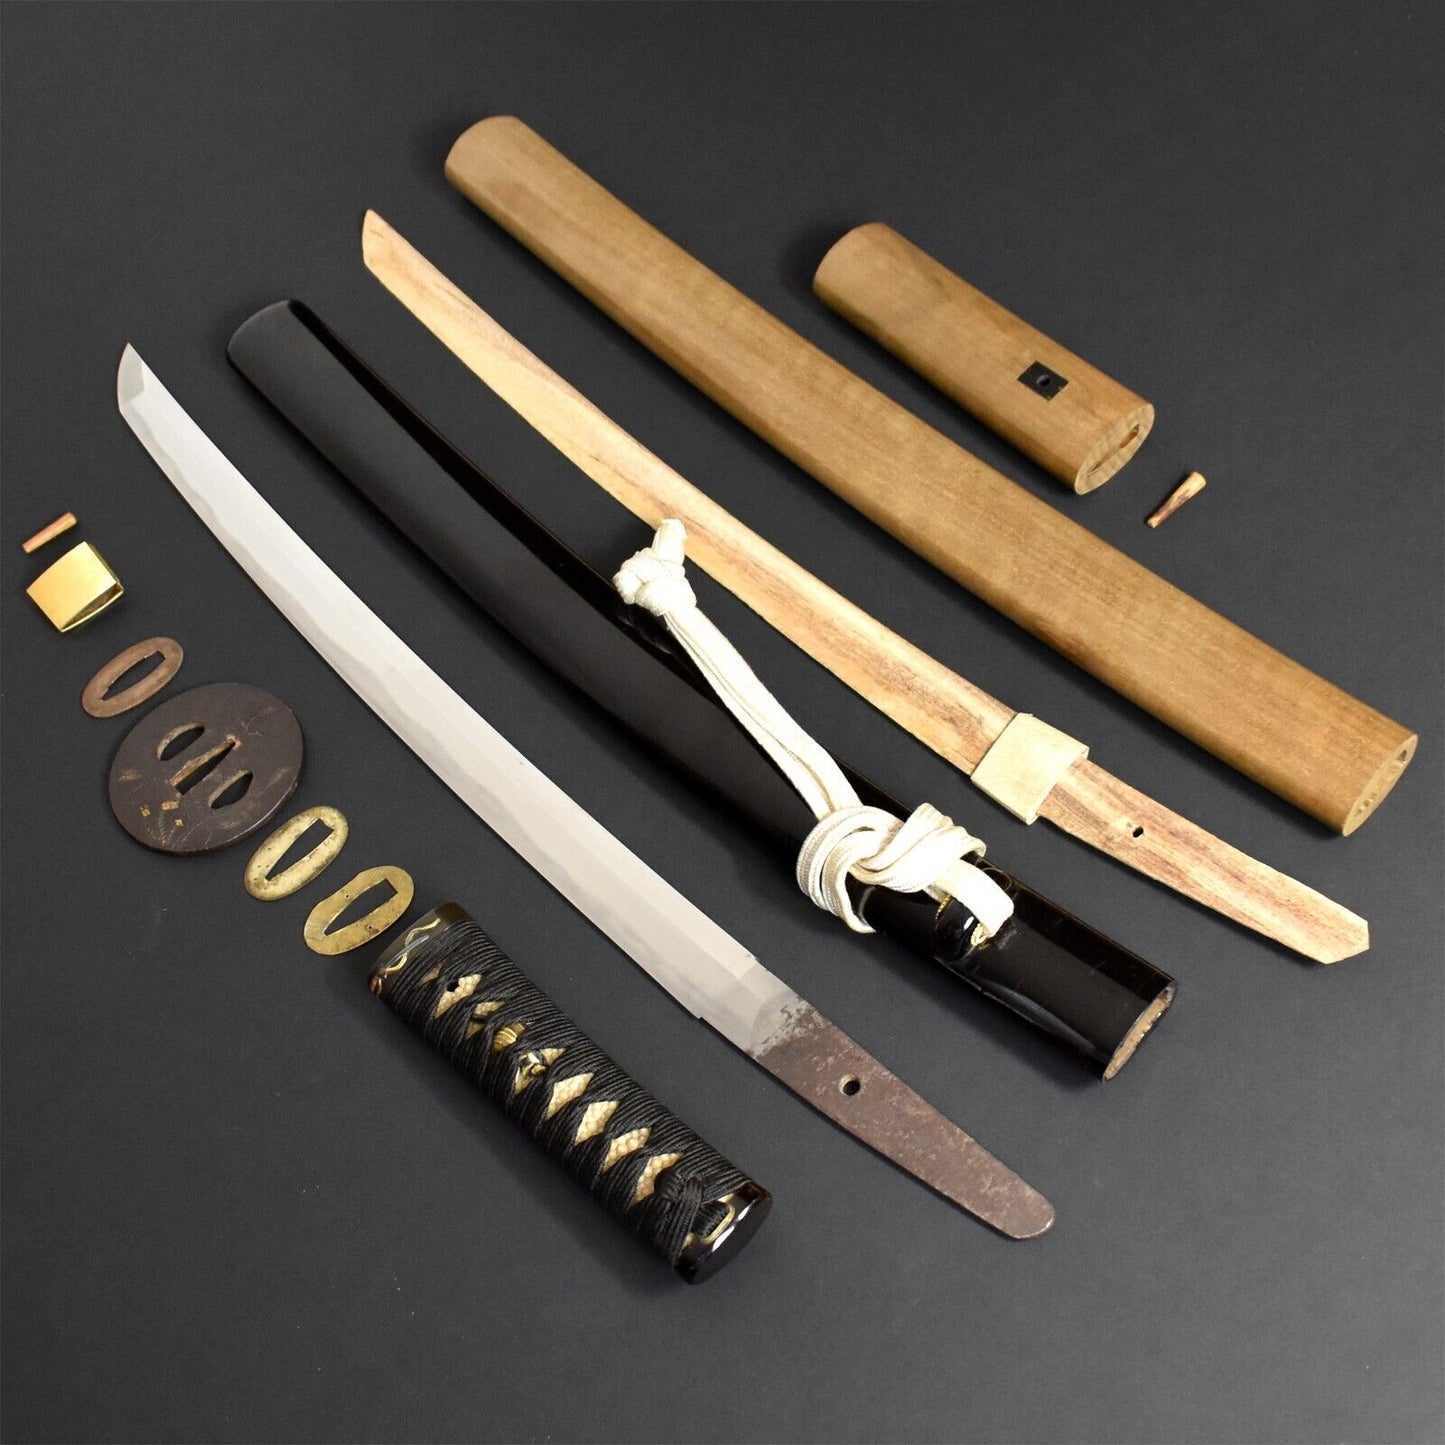 Antique Original Japanese Katana Sword Wakizashi Koshirae Authentic Samurai Blade Tamahagane Steel.